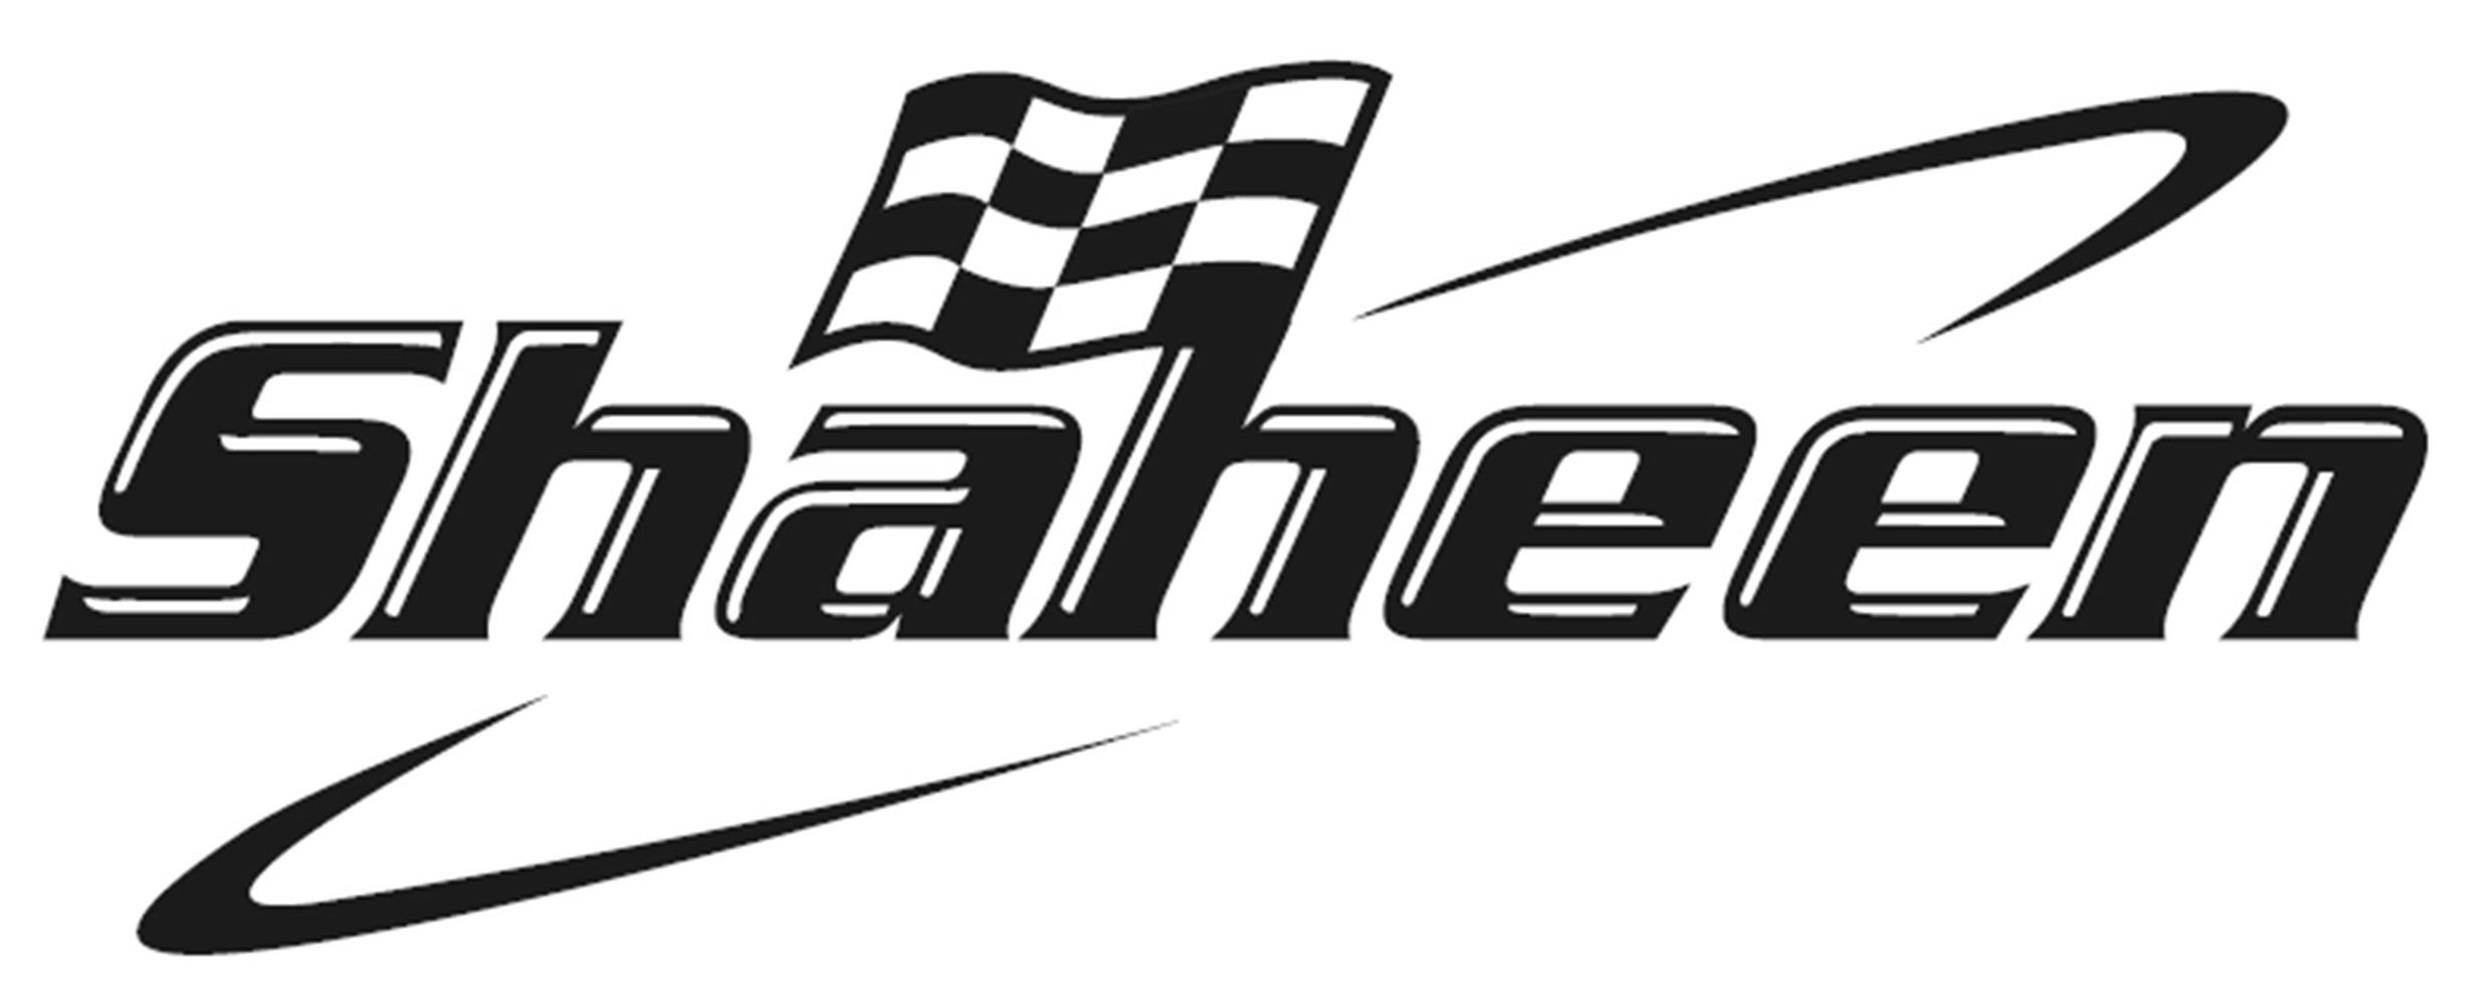 Shaheen_logo